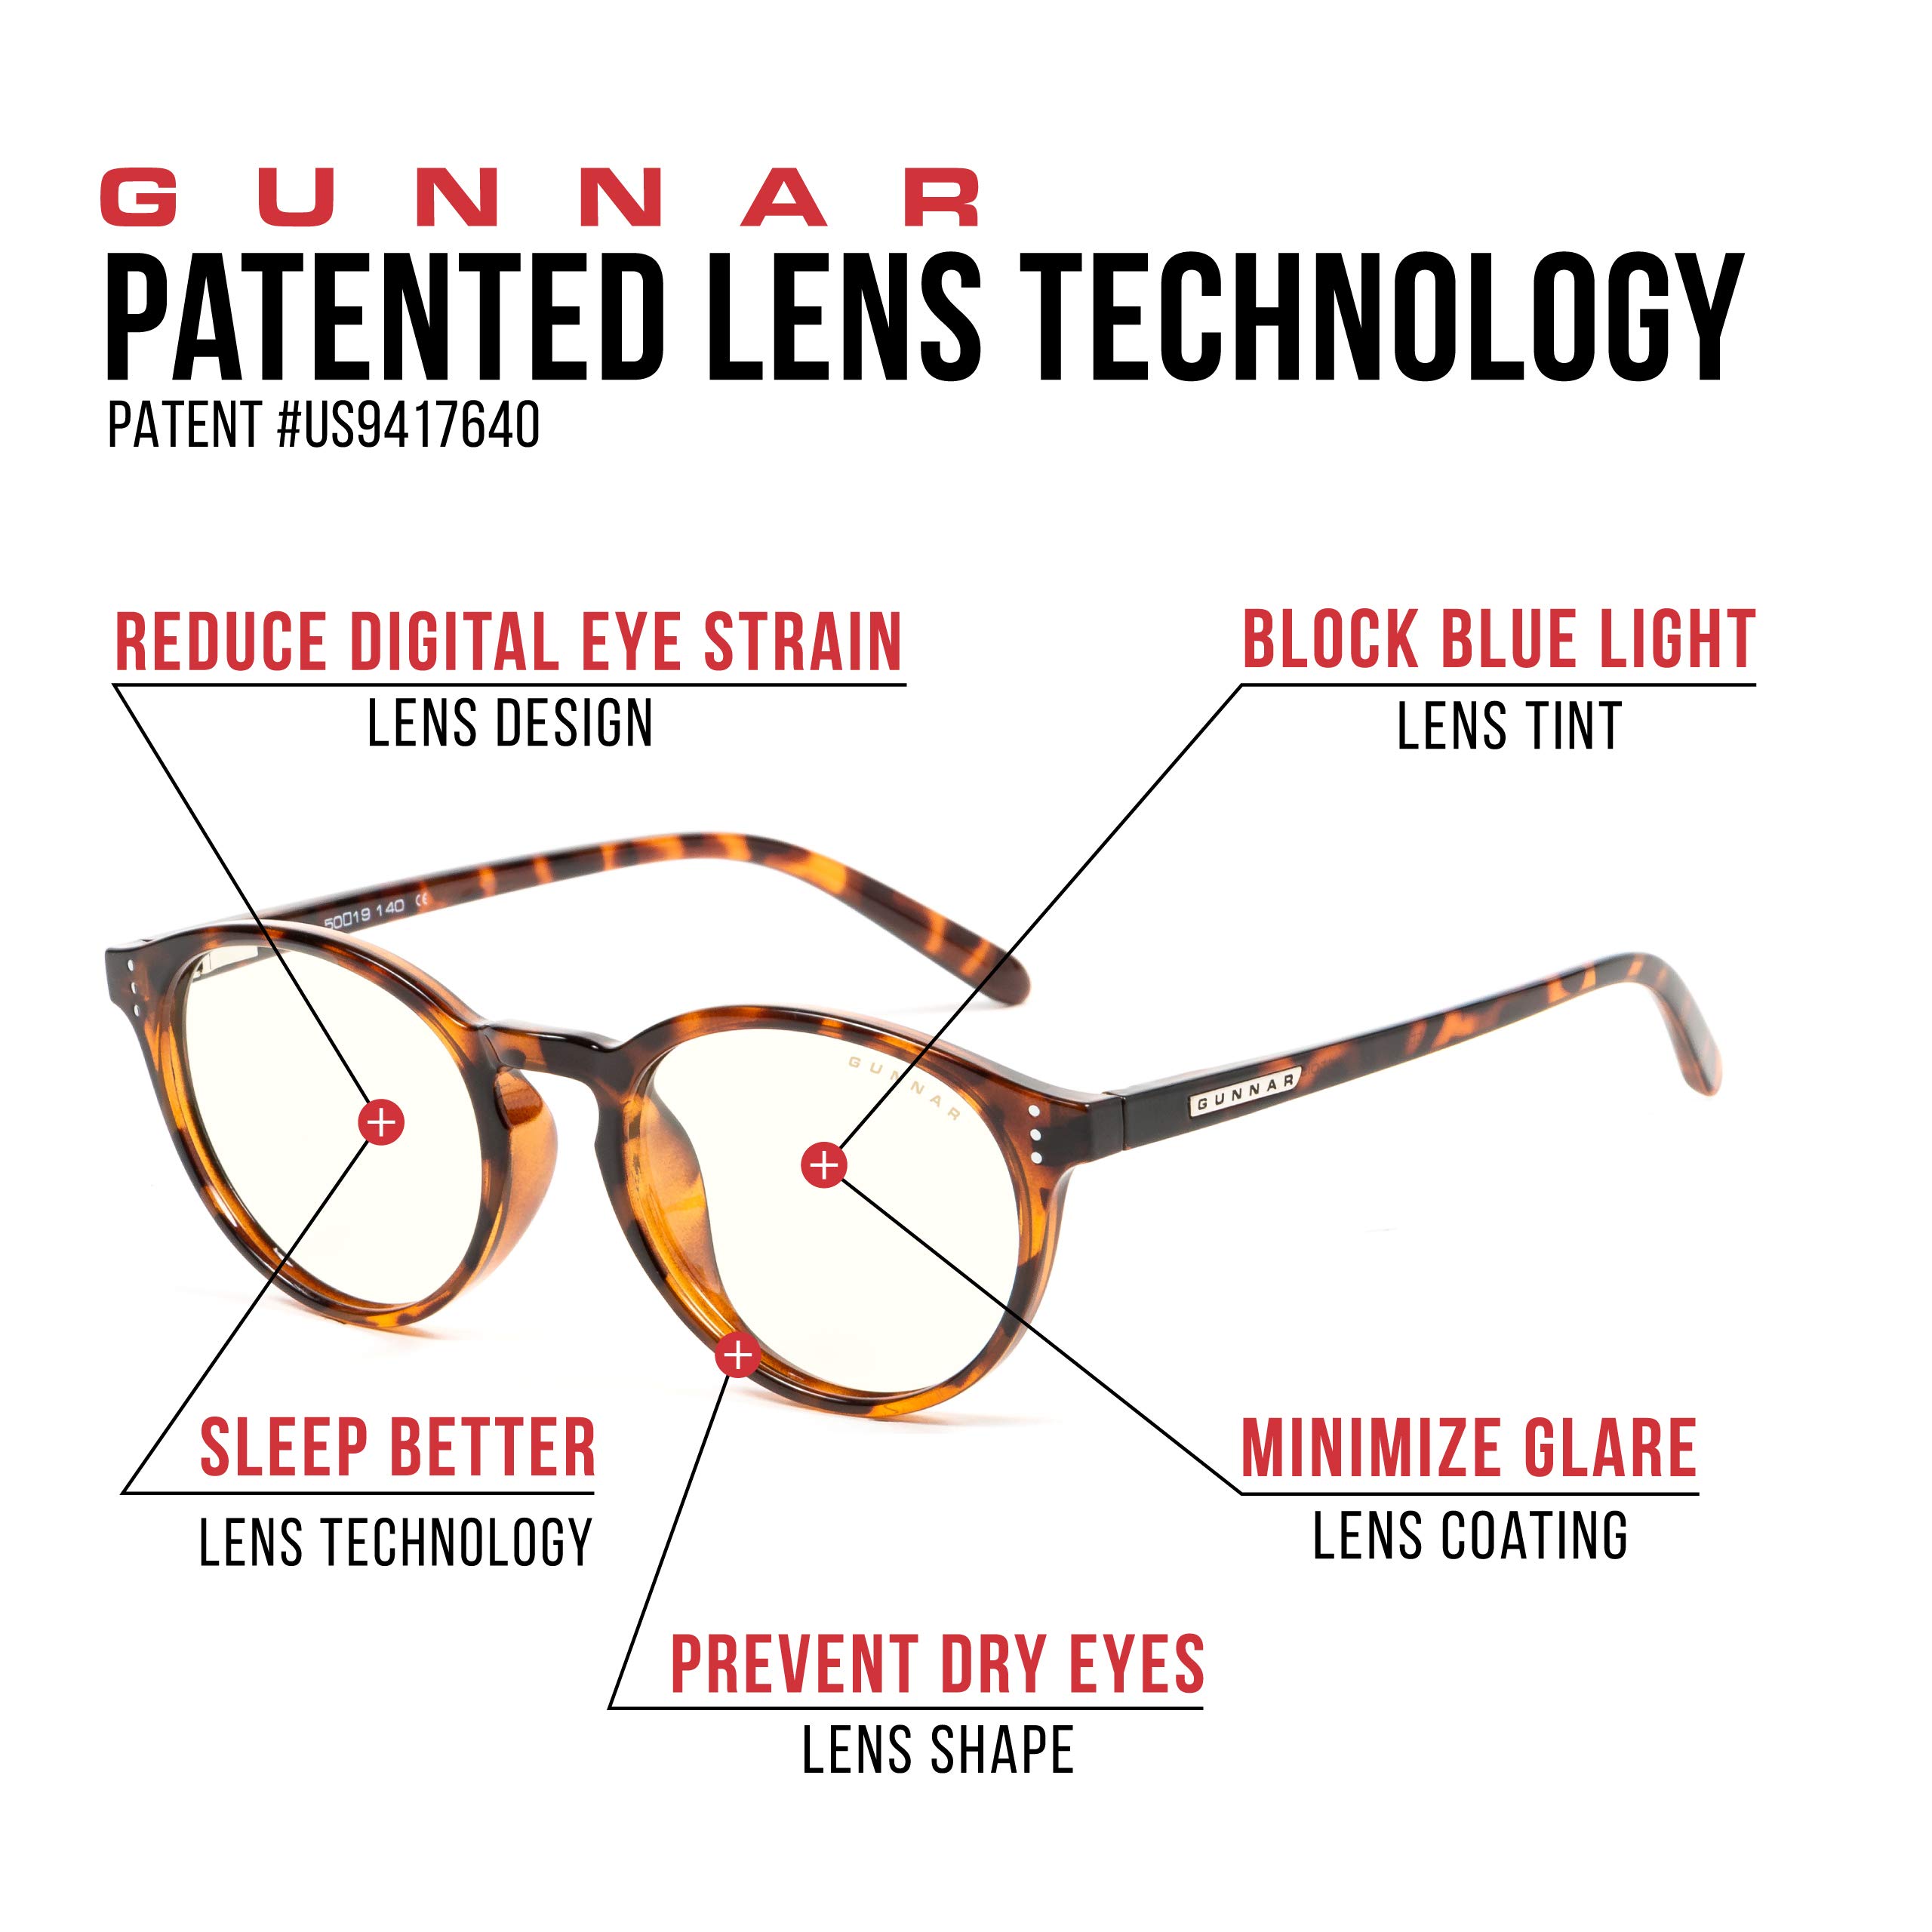 GUNNAR - Blue Light Reading Glasses - Blocks 35% Blue Light - Attaché, Tortoise, Clear Tint, Pwr +3.0